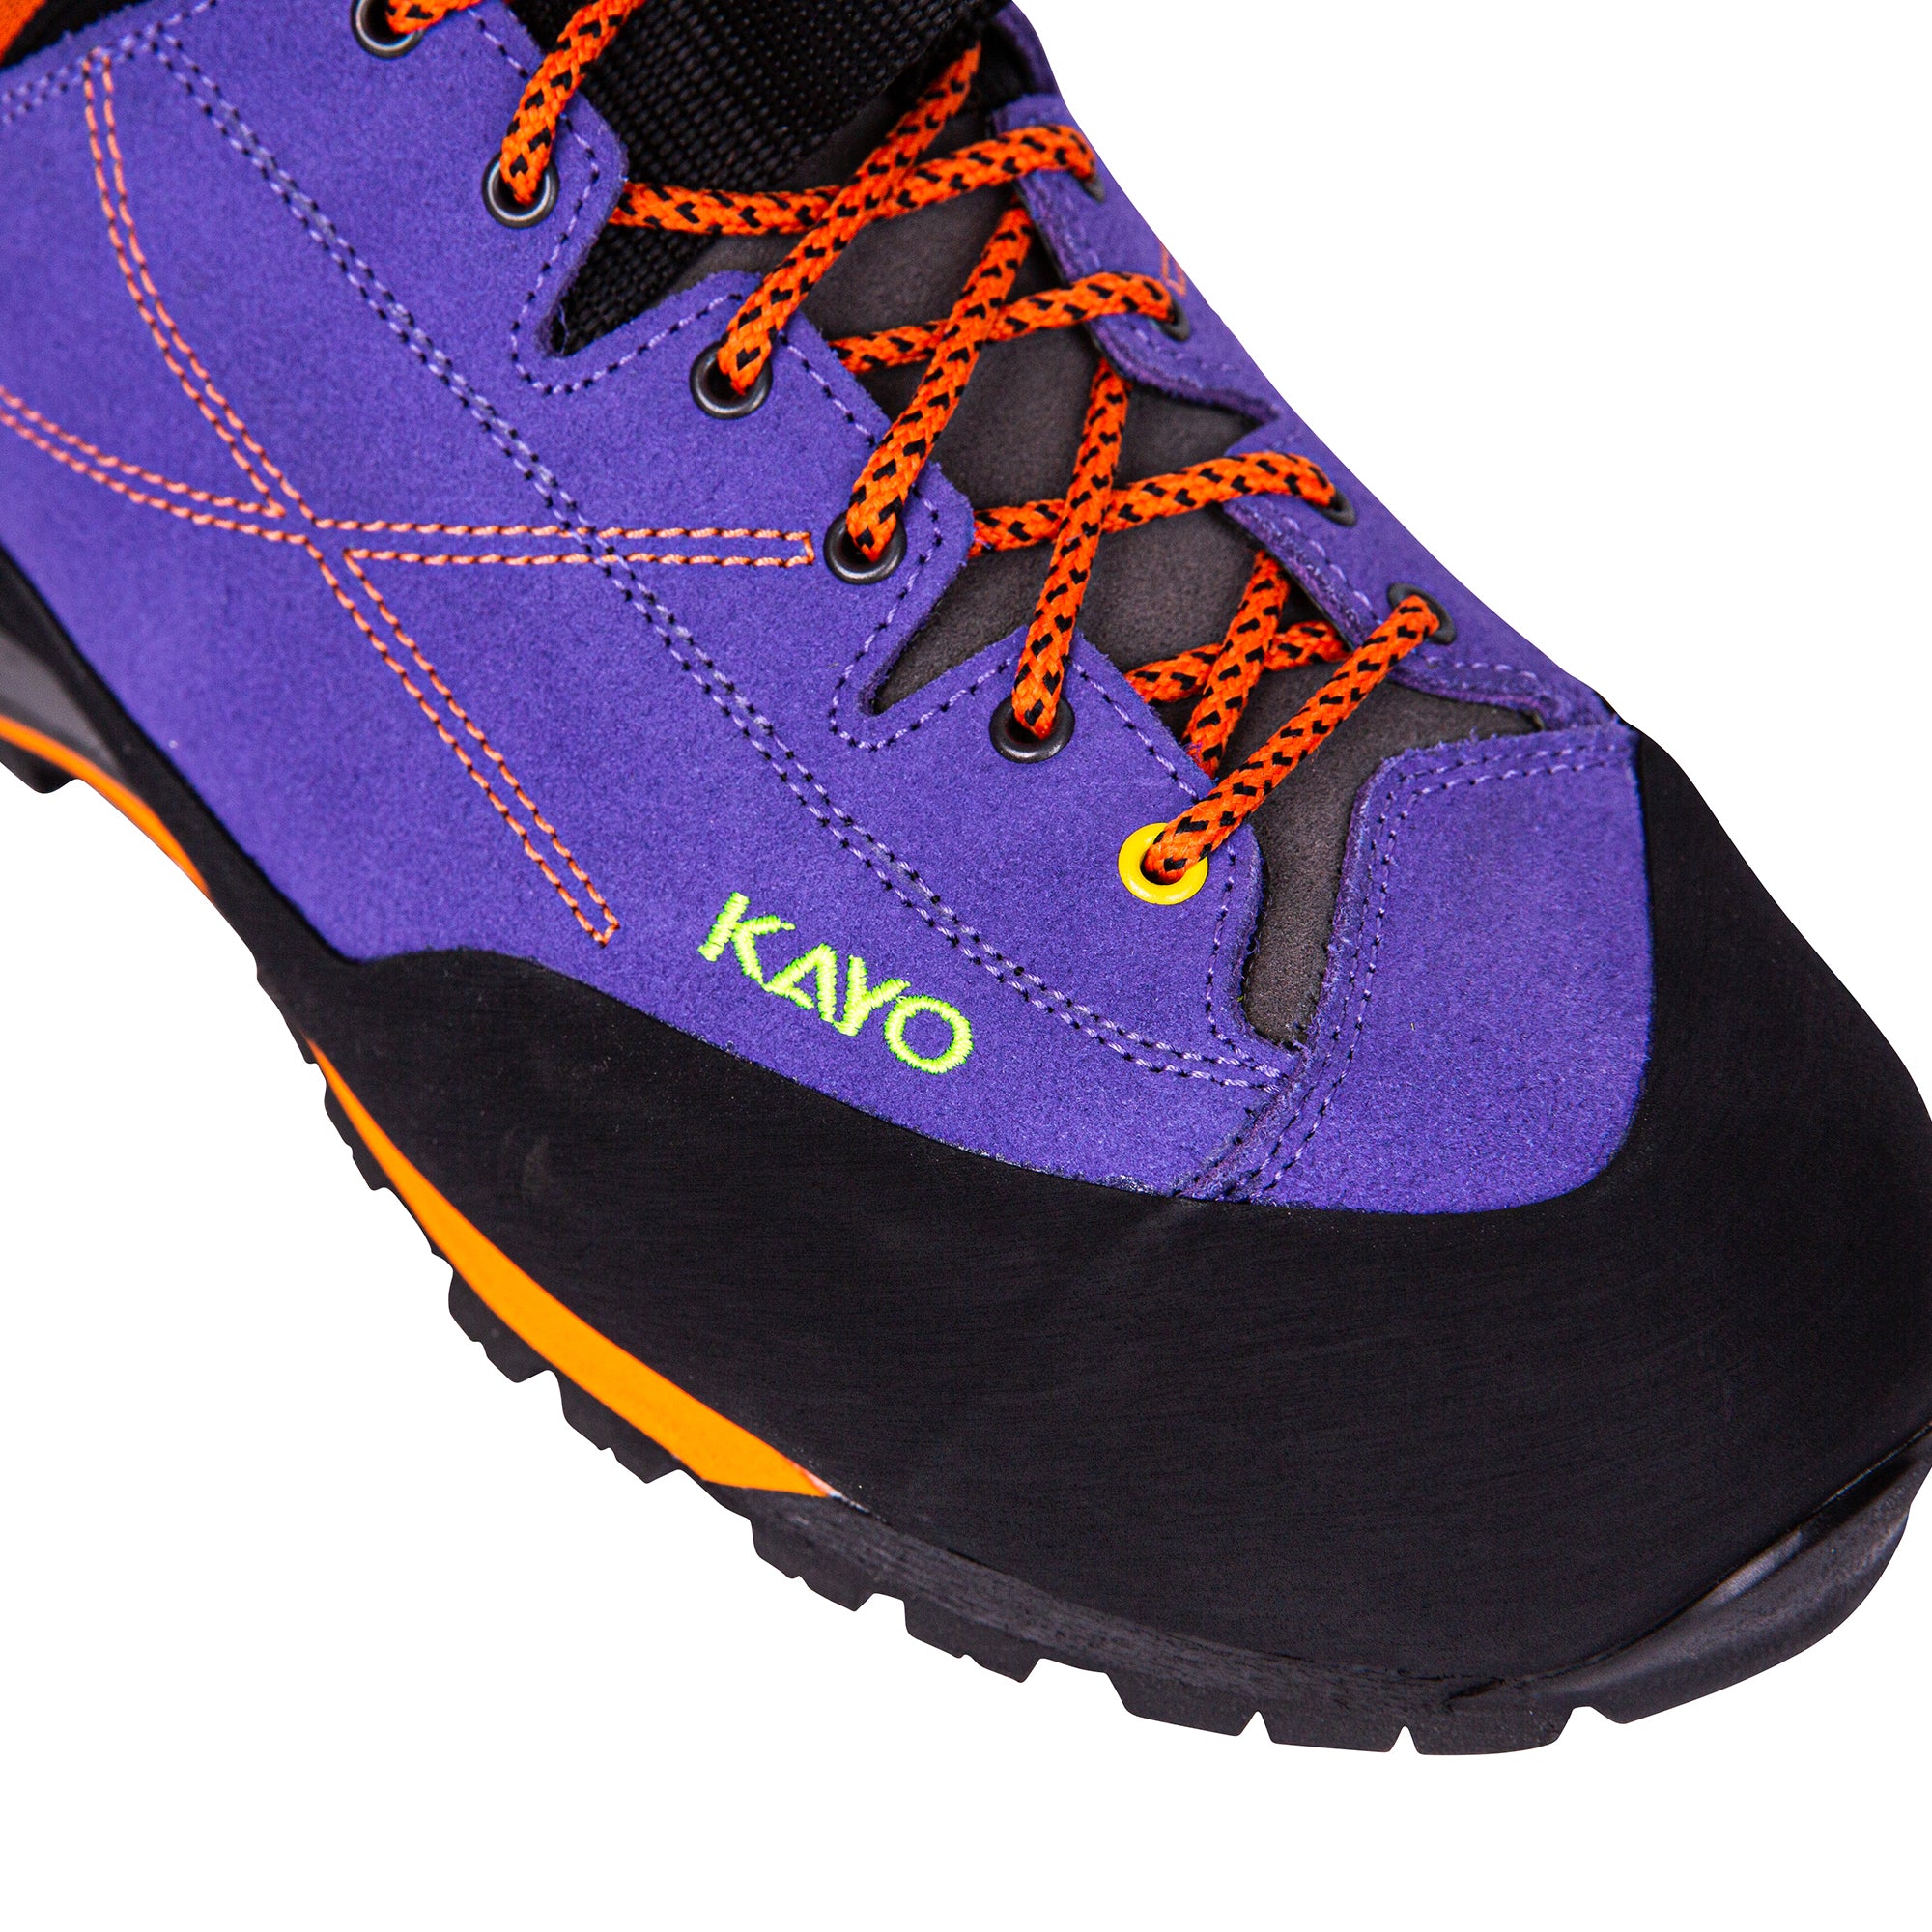 AT34000 Kayo Chainsaw Boot - Purple